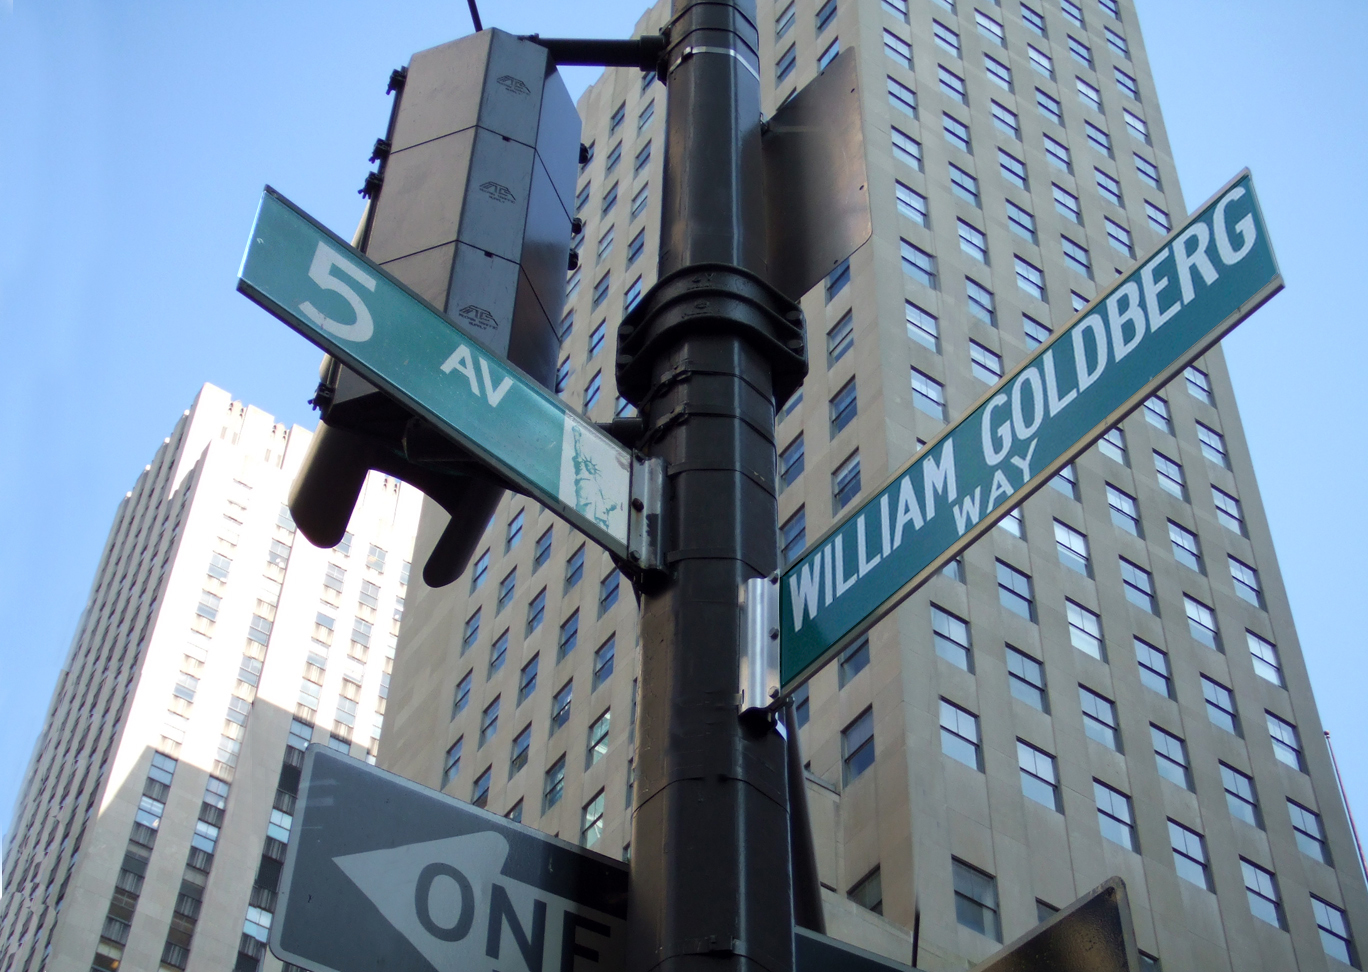 William Goldberg Way NYC